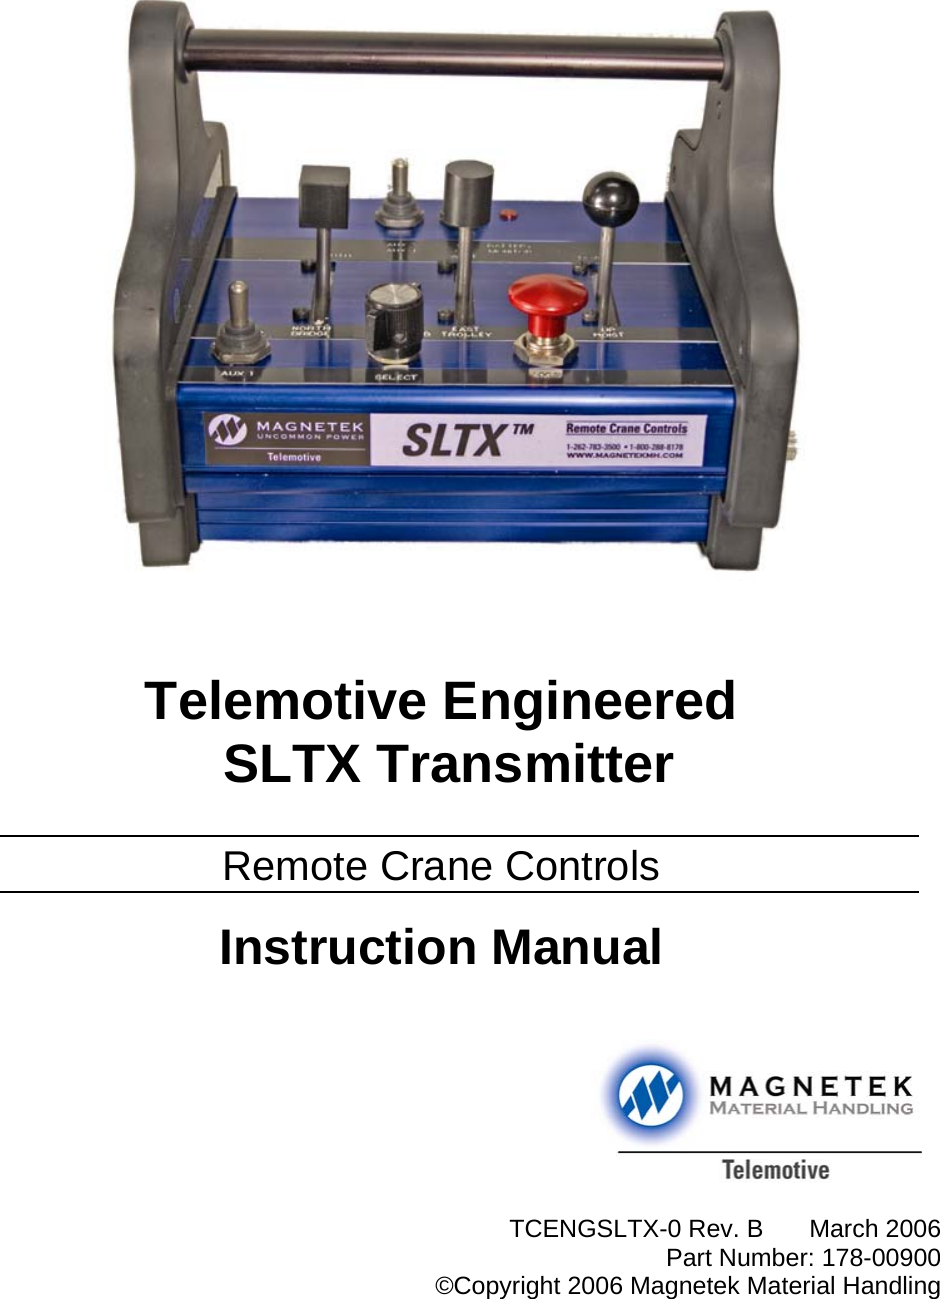               Telemotive Engineered  SLTX Transmitter  Remote Crane Controls  Instruction Manual           TCENGSLTX-0 Rev. B  March 2006Part Number: 178-00900©Copyright 2006 Magnetek Material Handling